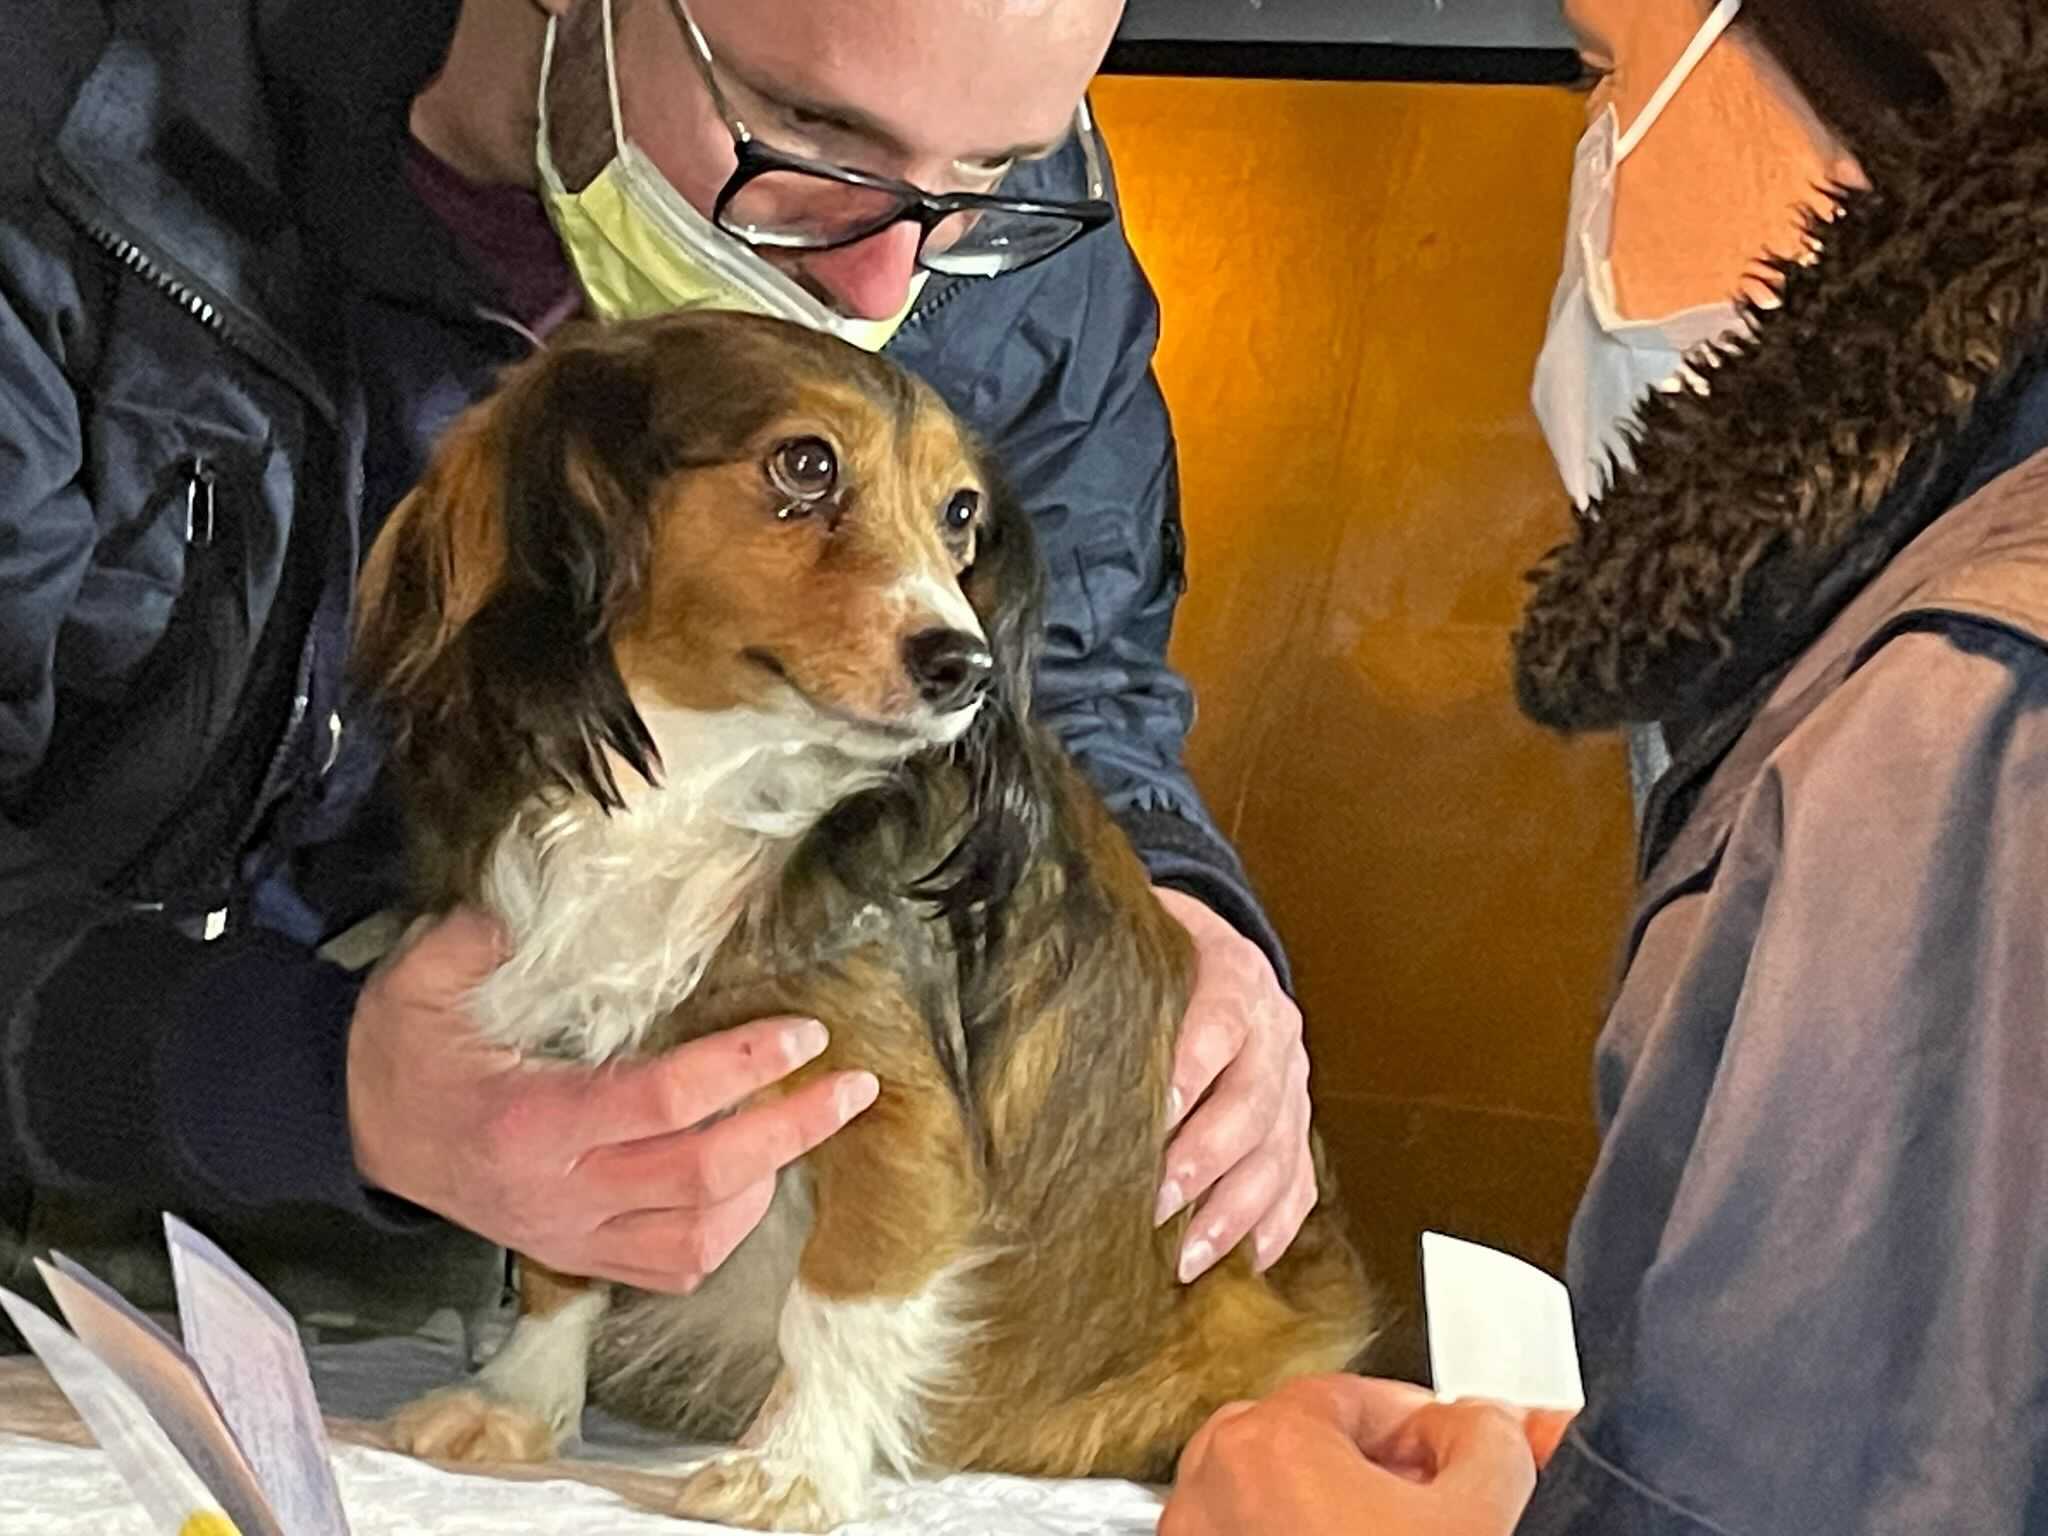 PETA partner clinic at the Romanian border https://www.peta.org/blog/peta-germany-helps-ukraine-animals/